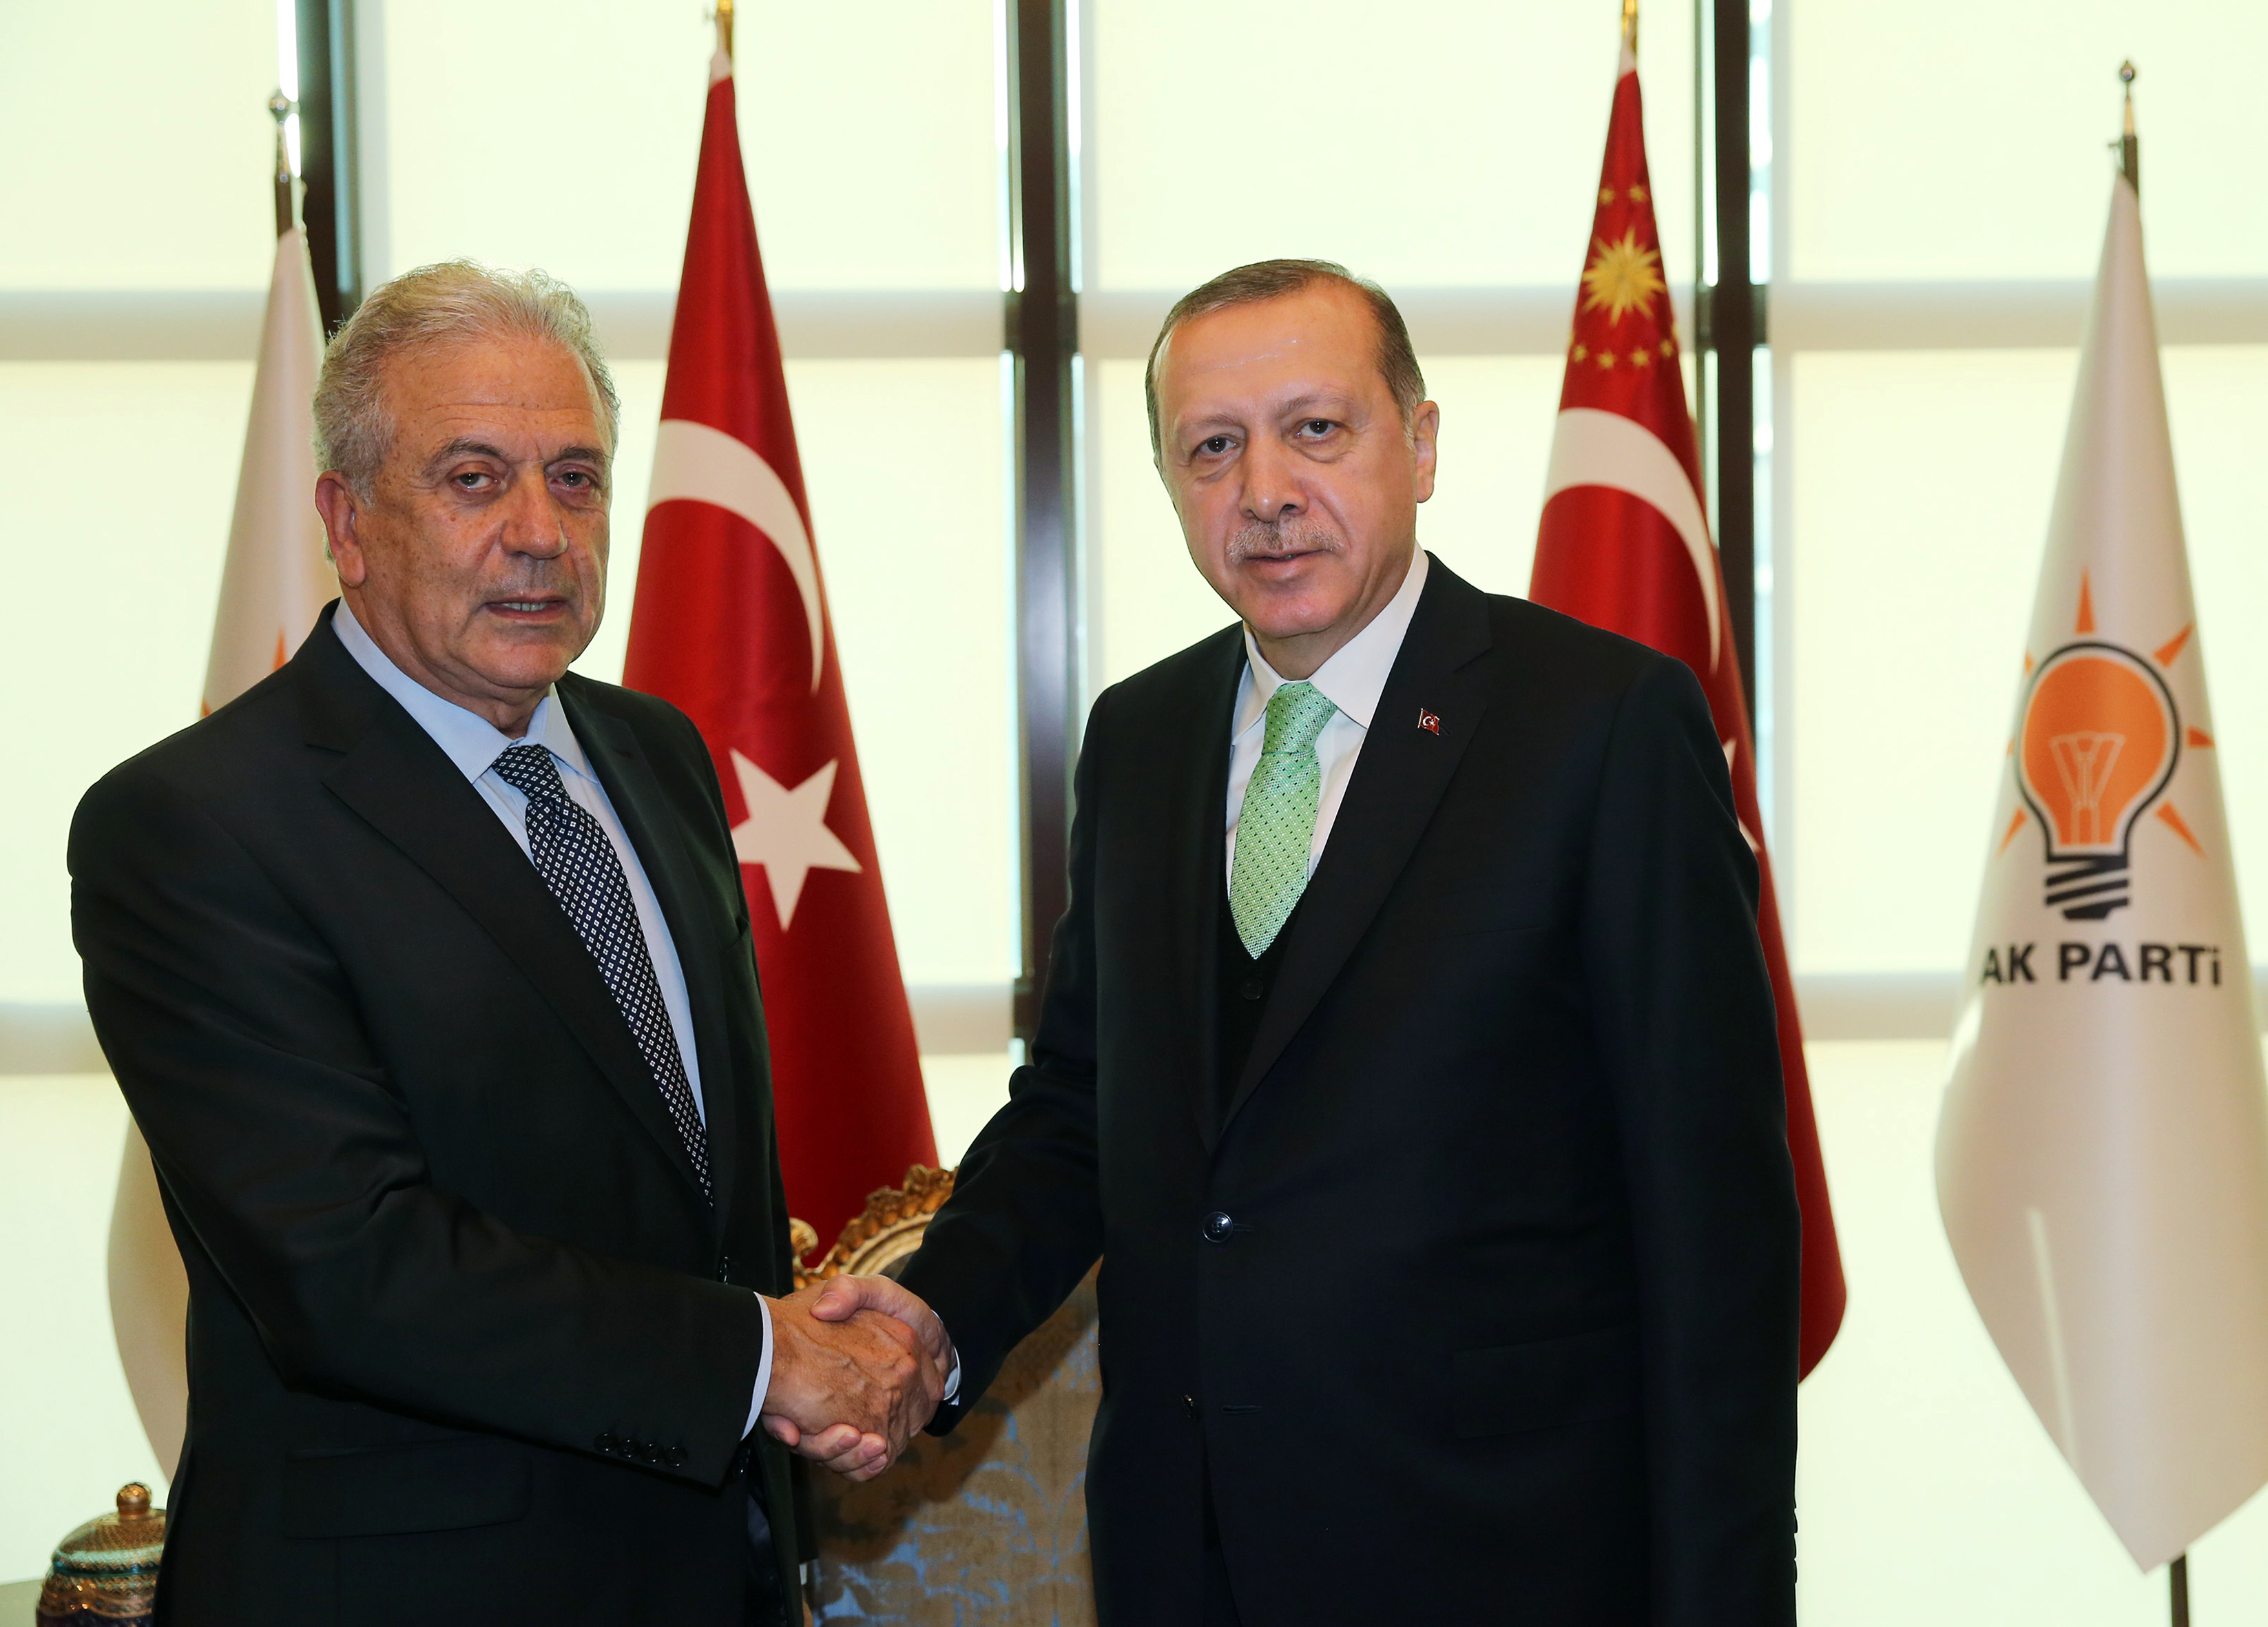 European Commission: EU enforcing refugee readmission deal with Turkey